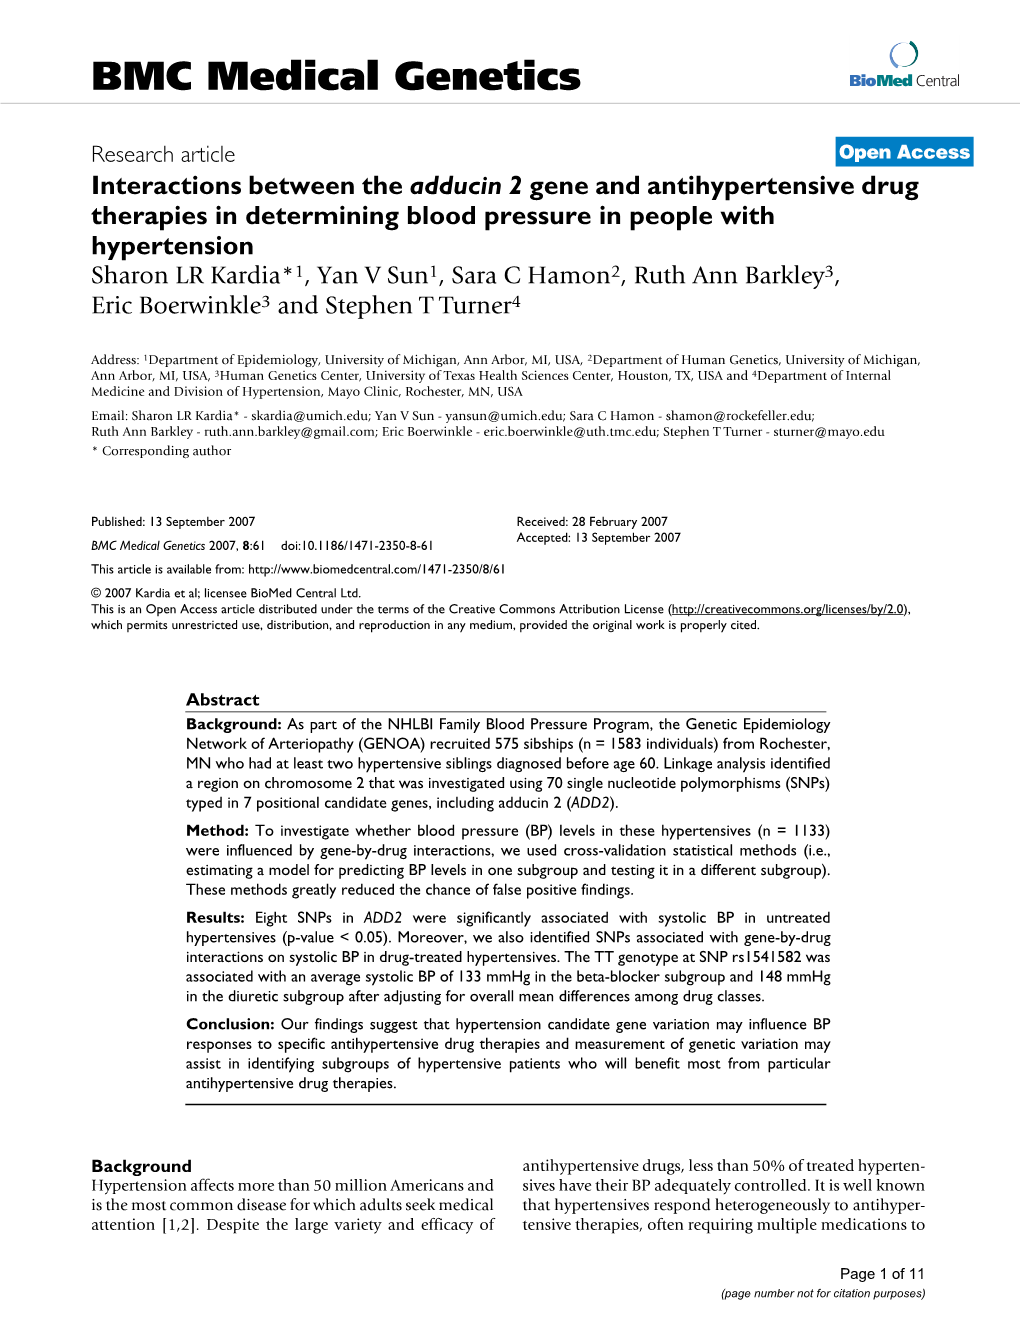 Interactions Between the Adducin 2 Gene and Antihypertensive Drug